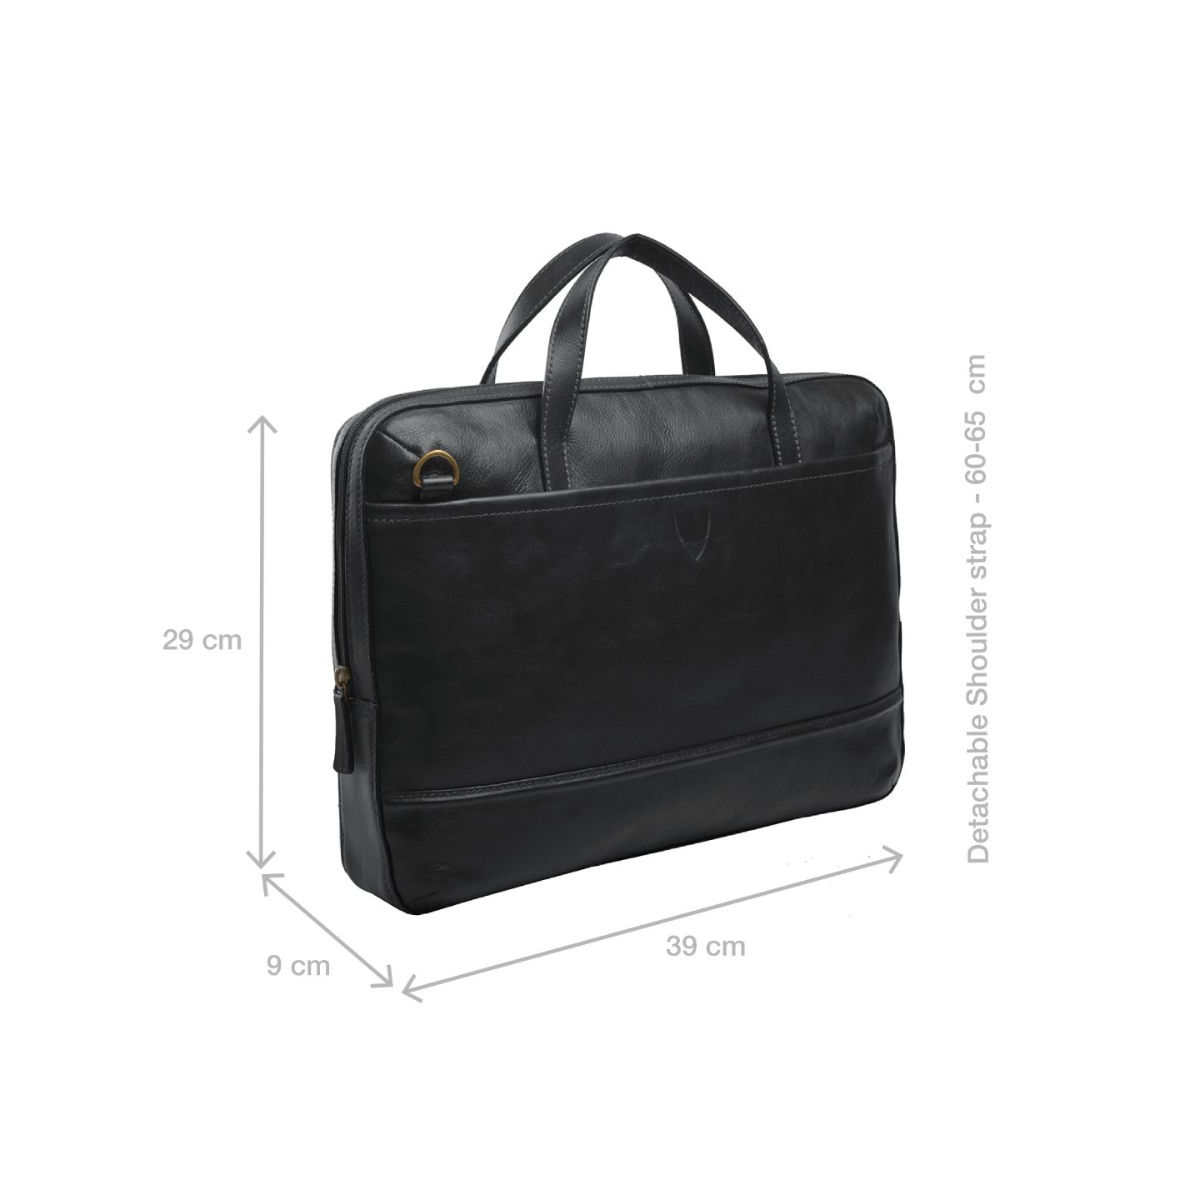 Buy Hidesign Brown Handbag online